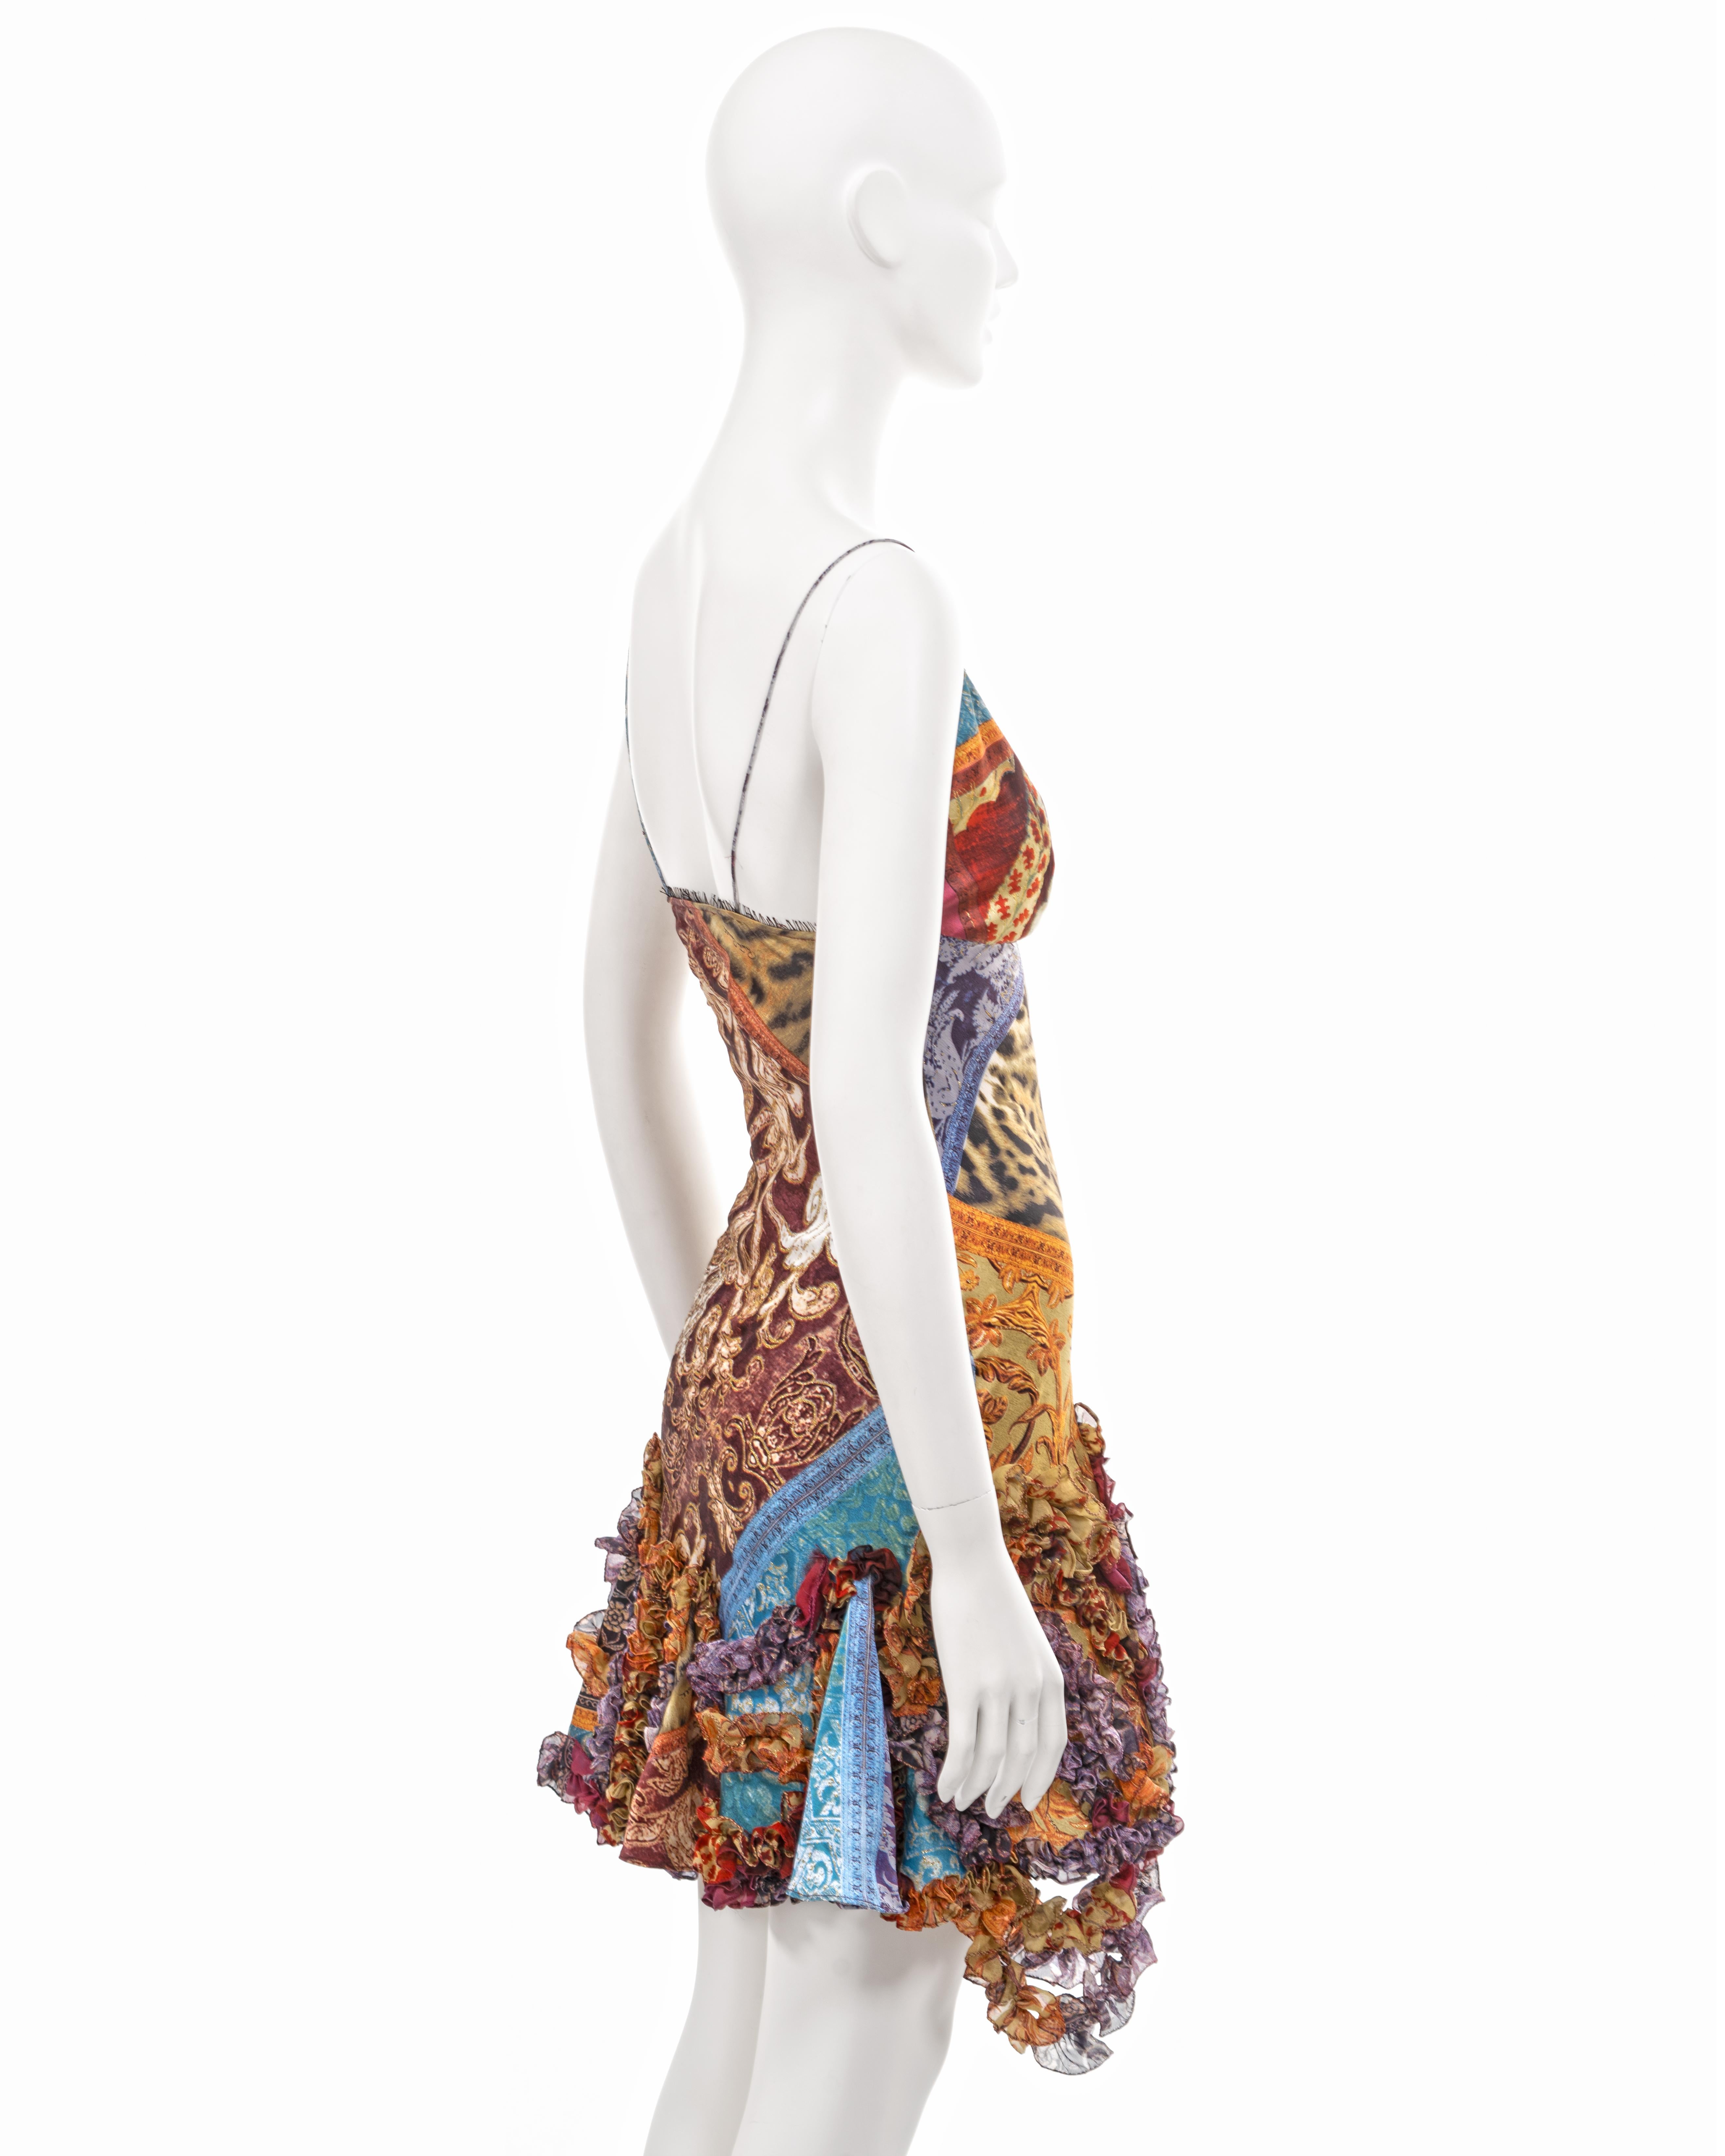 Roberto Cavalli brocade printed silk evening dress with ruffled skirt, fw 2004 For Sale 4